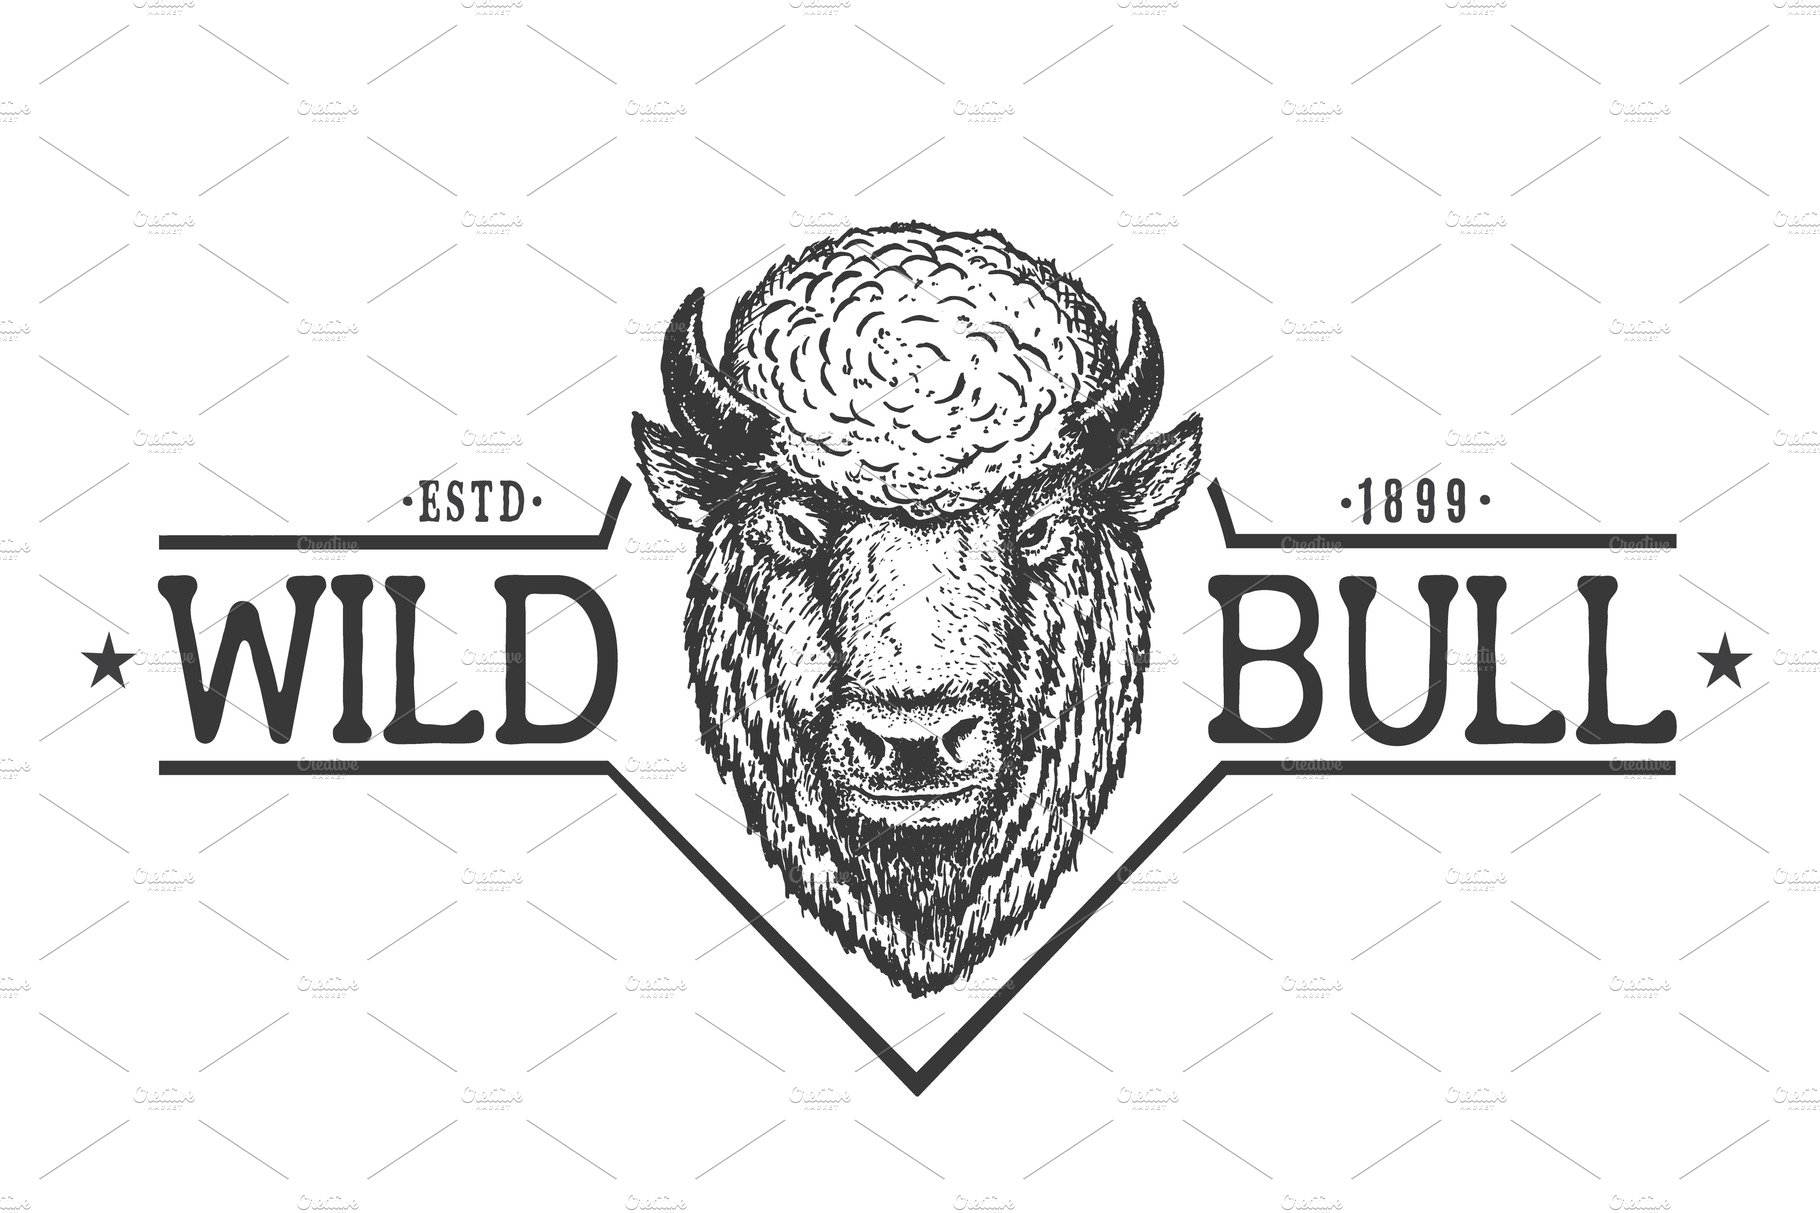 Wild bull cover image.